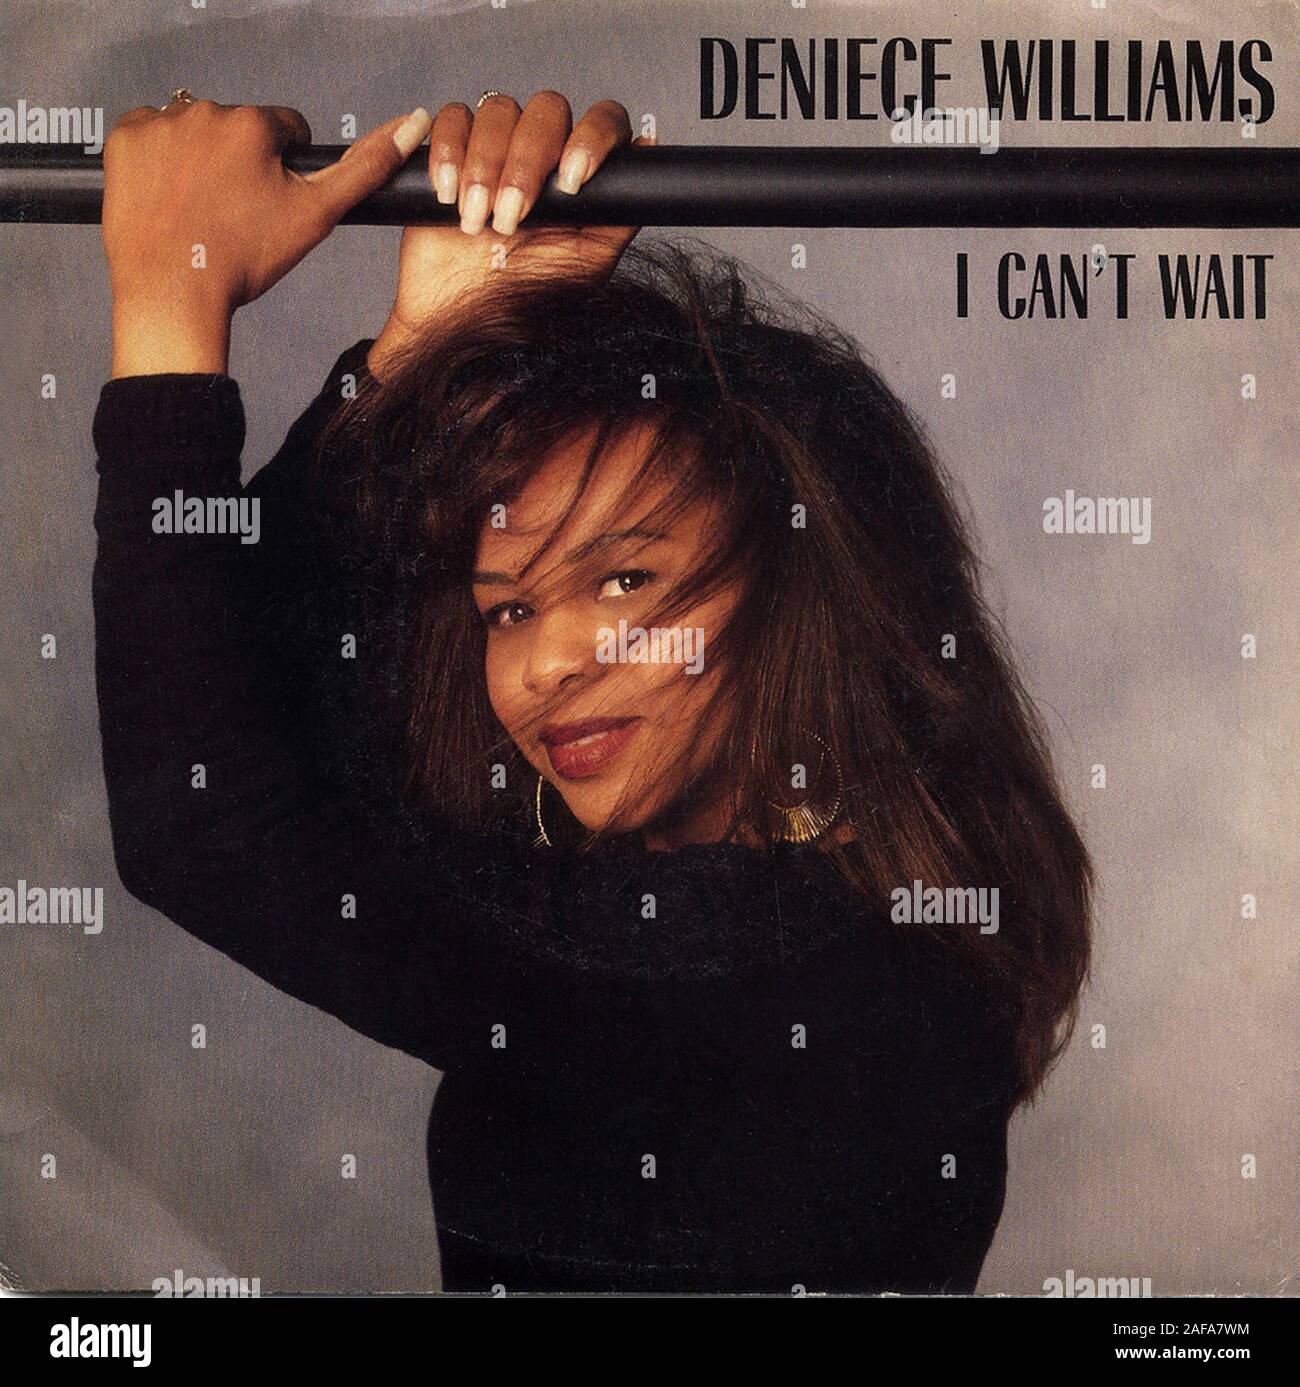 Deniece Williams - I Can't Wait - Vintage vinyl album cover Stock Photo